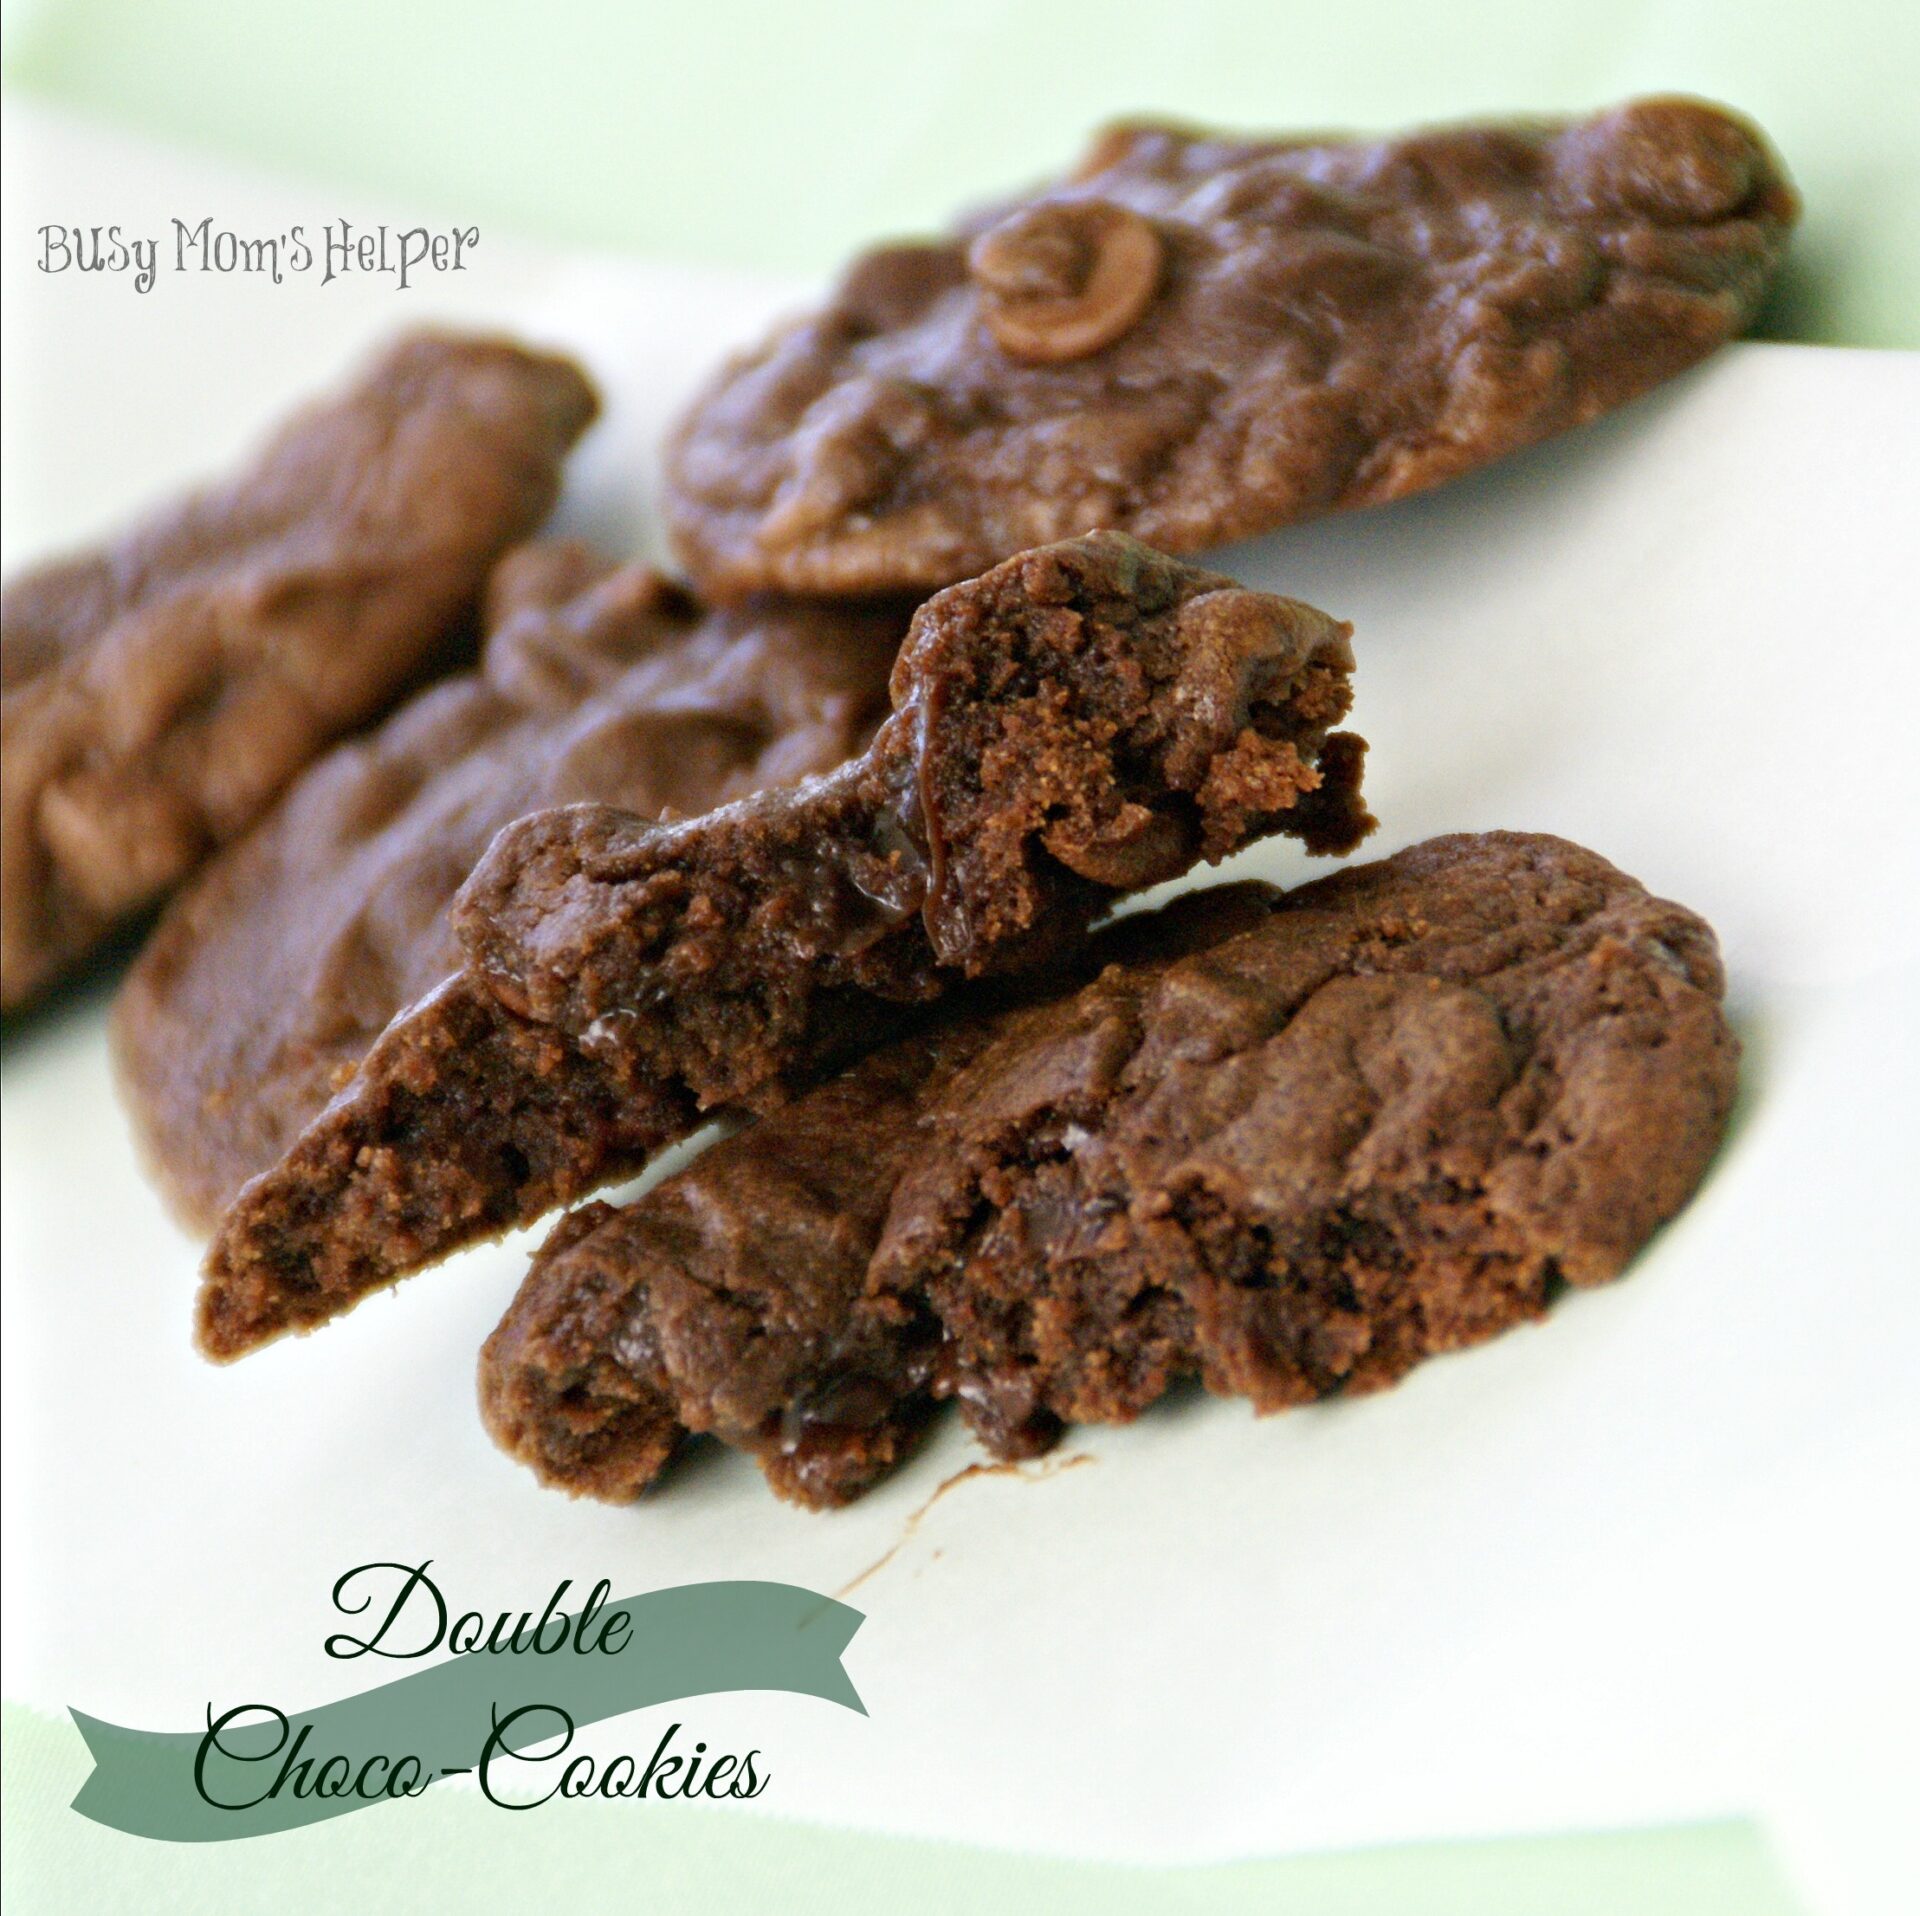 Double Choco-Cookies / Busy Mom's Helper